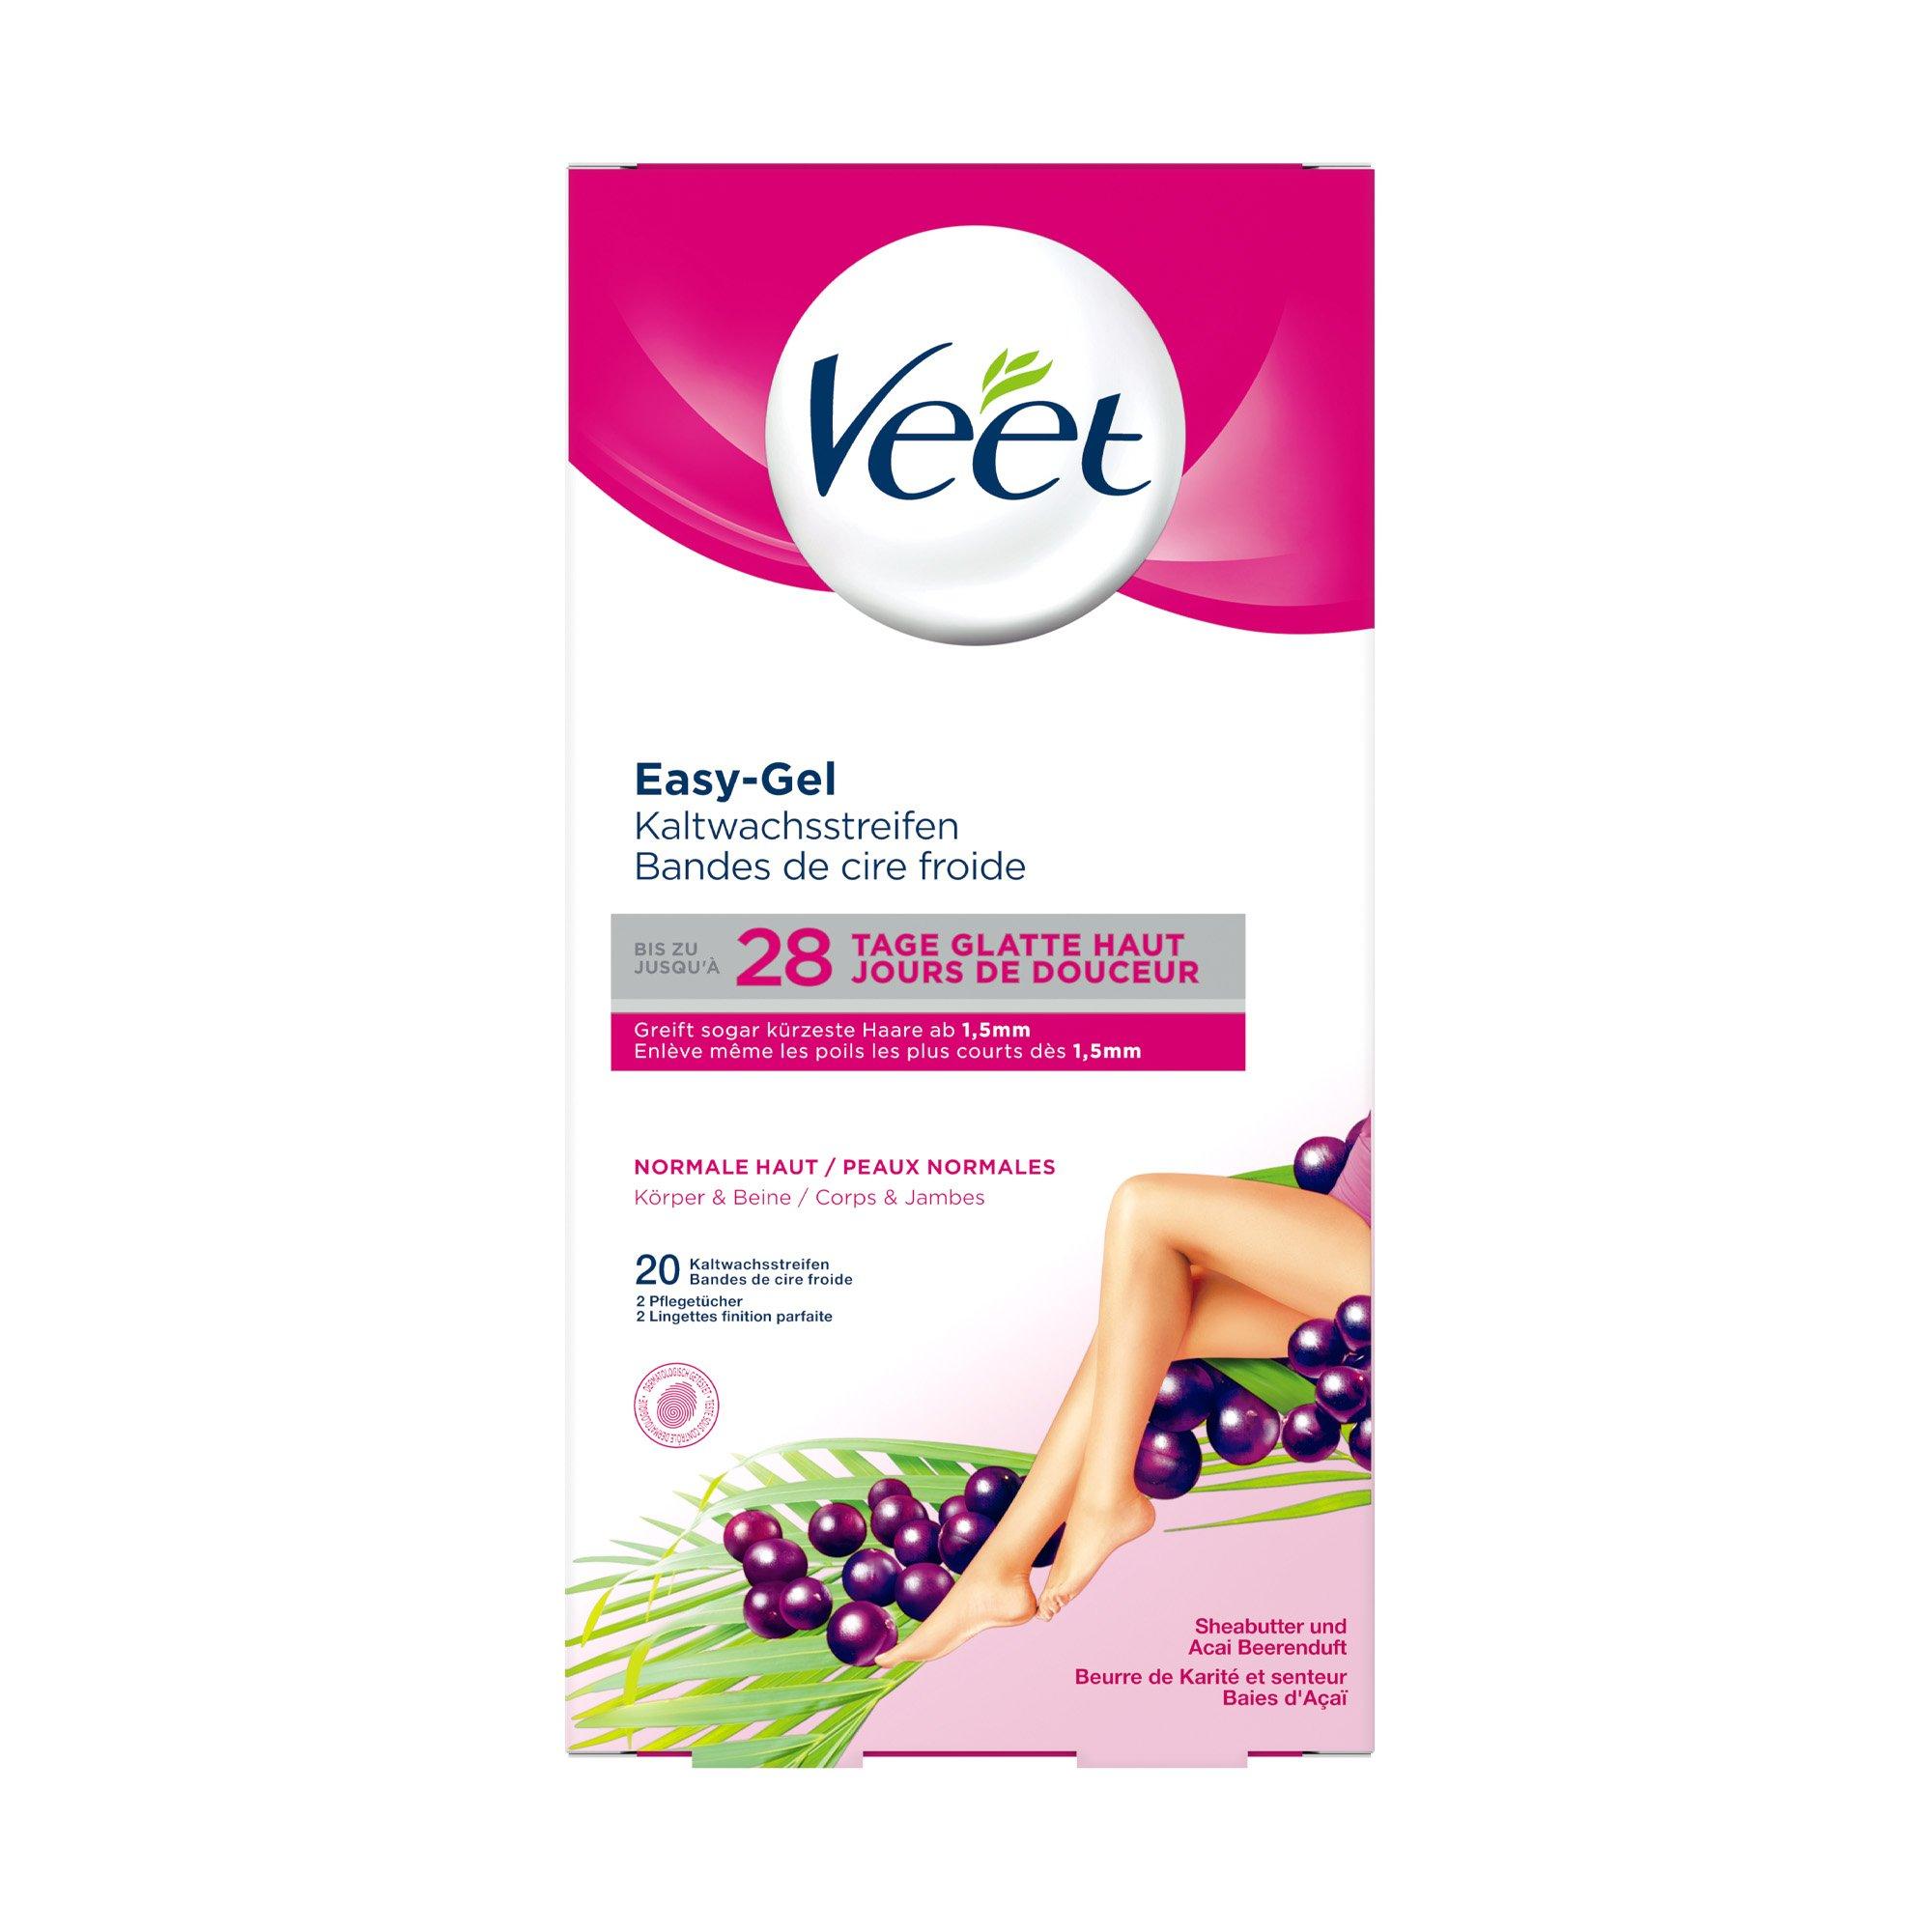 Image of Veet Kaltwachsstreifen Beine & Körper Shea-Butter & Beerenduft Easy-Gel - Normale Haut - Körper & Beine - 20Stück